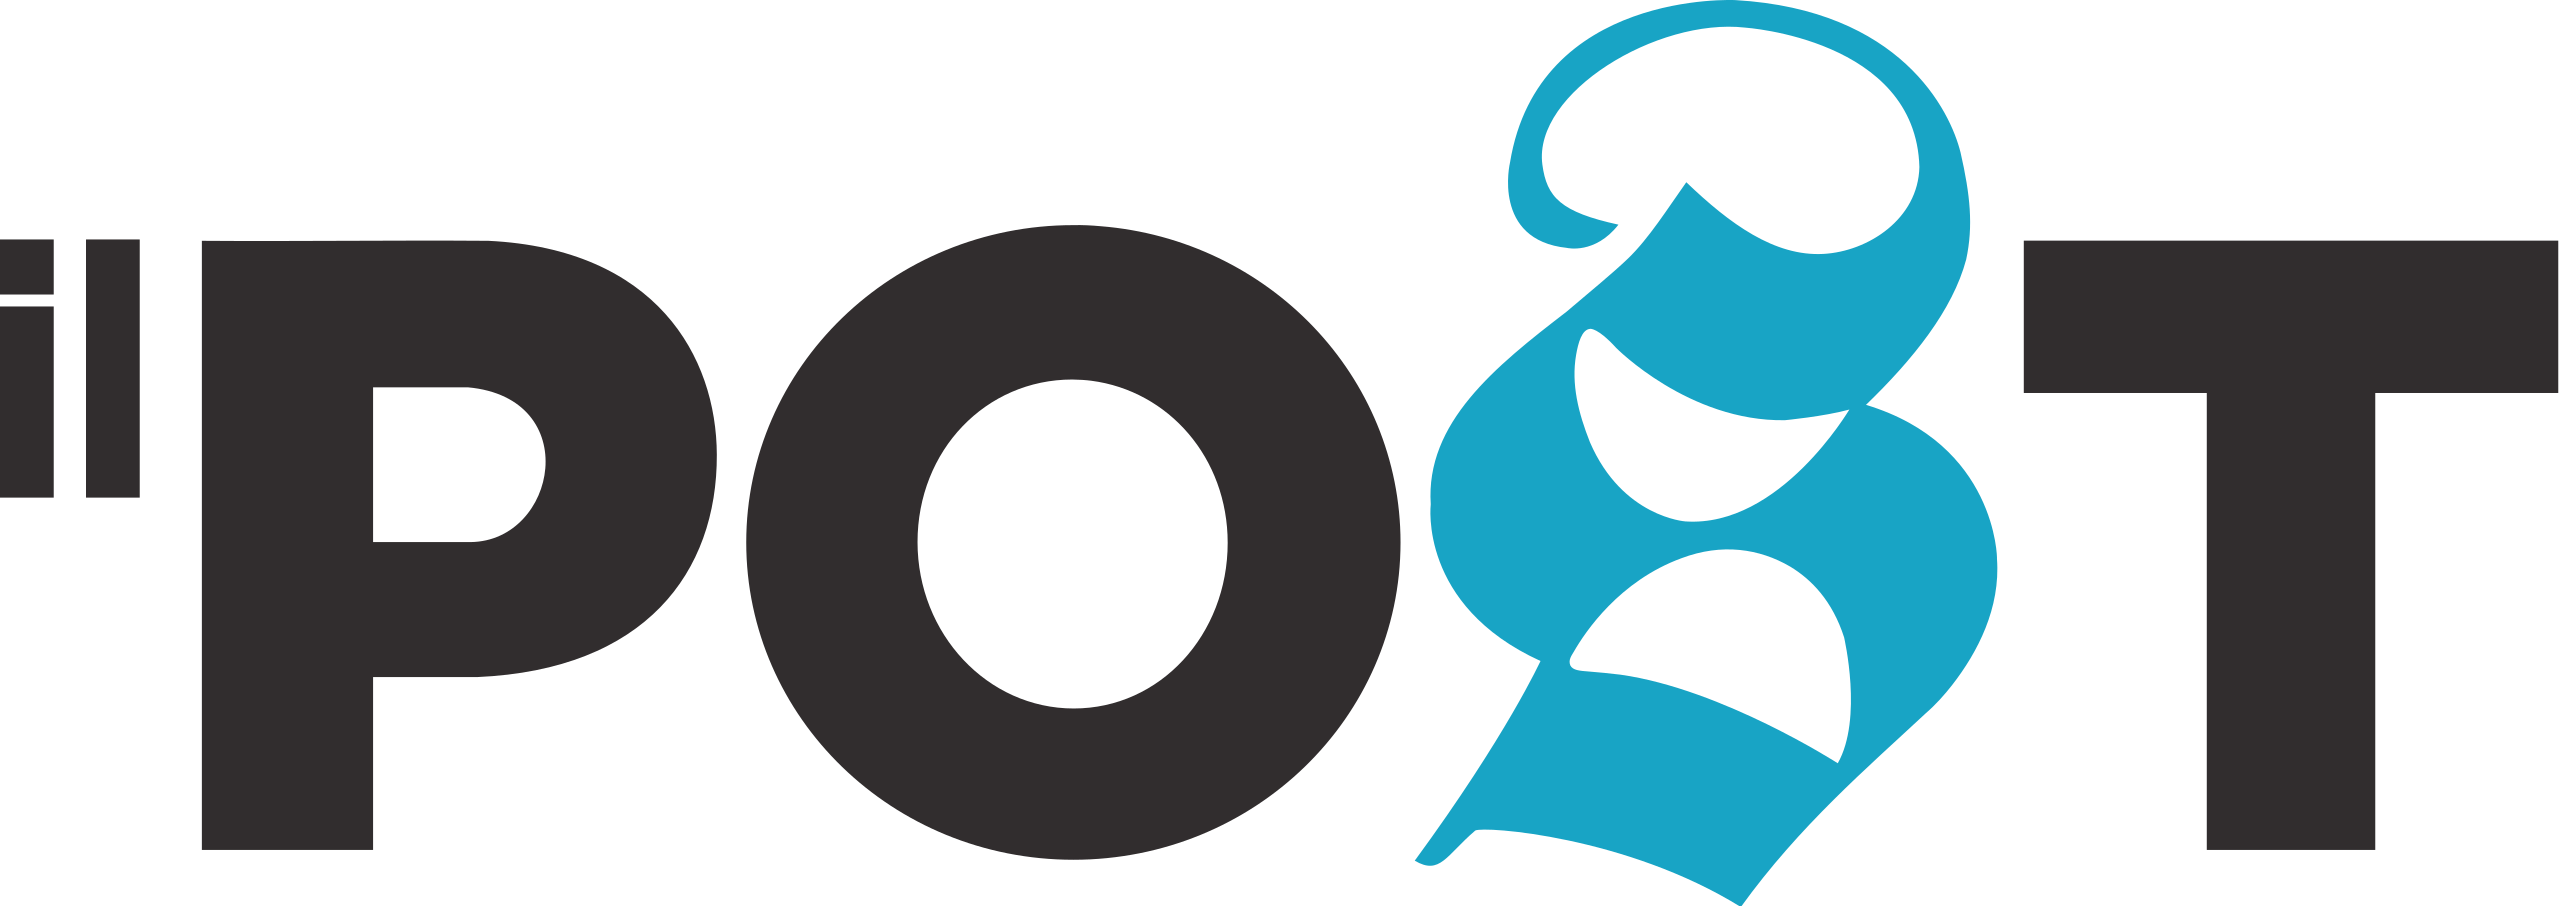 Il Post Logo